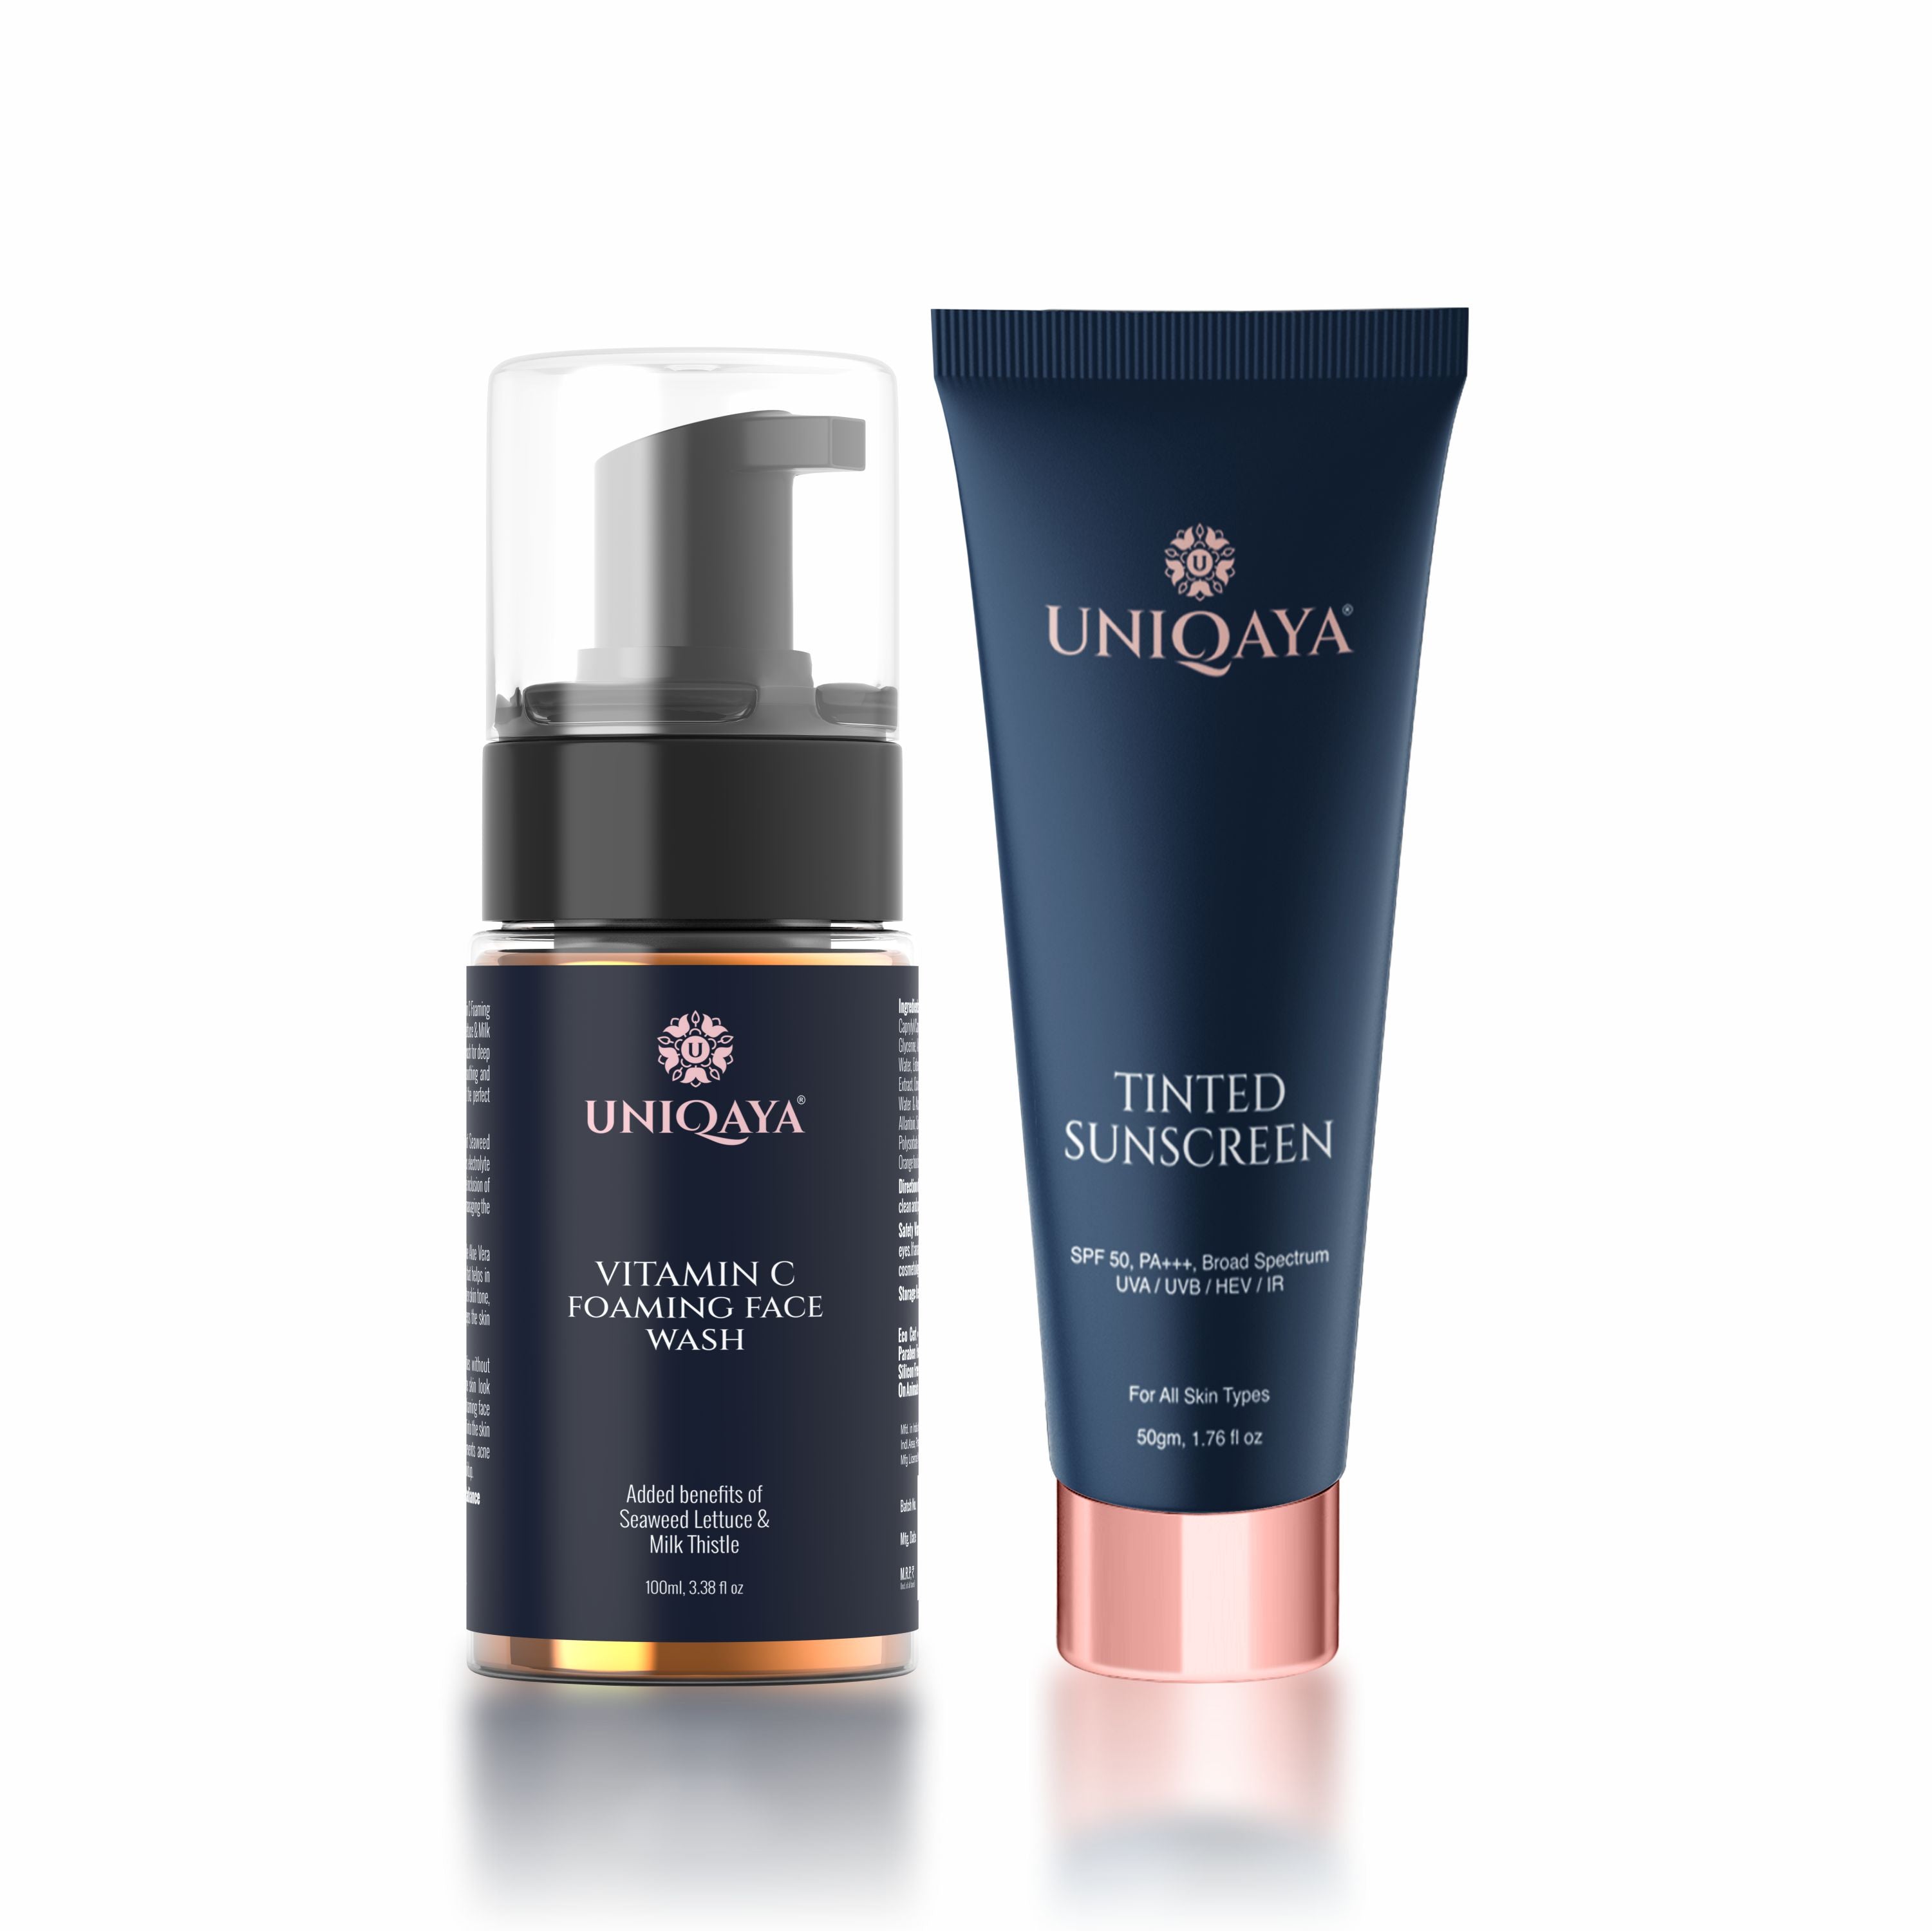 Uniqaya Vitamin C Foaming Face Wash and Tinted Sunscreen | Skin Care Combo Pack